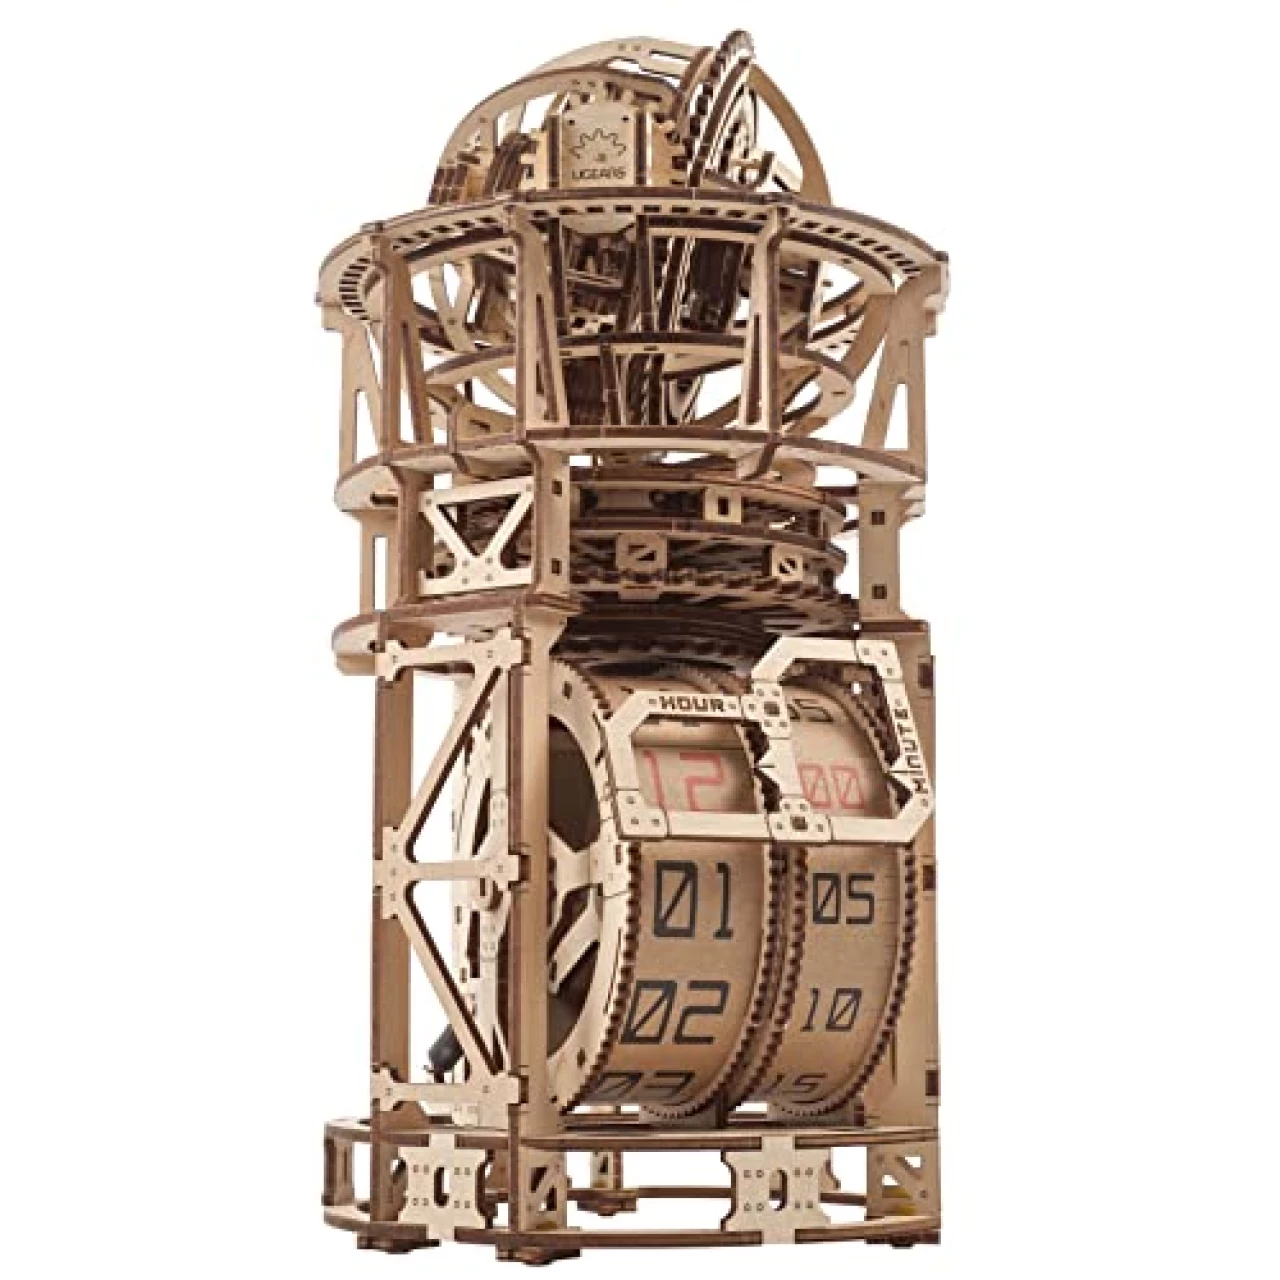 UGEARS Tourbillon Table Clock Kit - Sky Watcher 3D Wooden Puzzles Mechanical Clock Kit